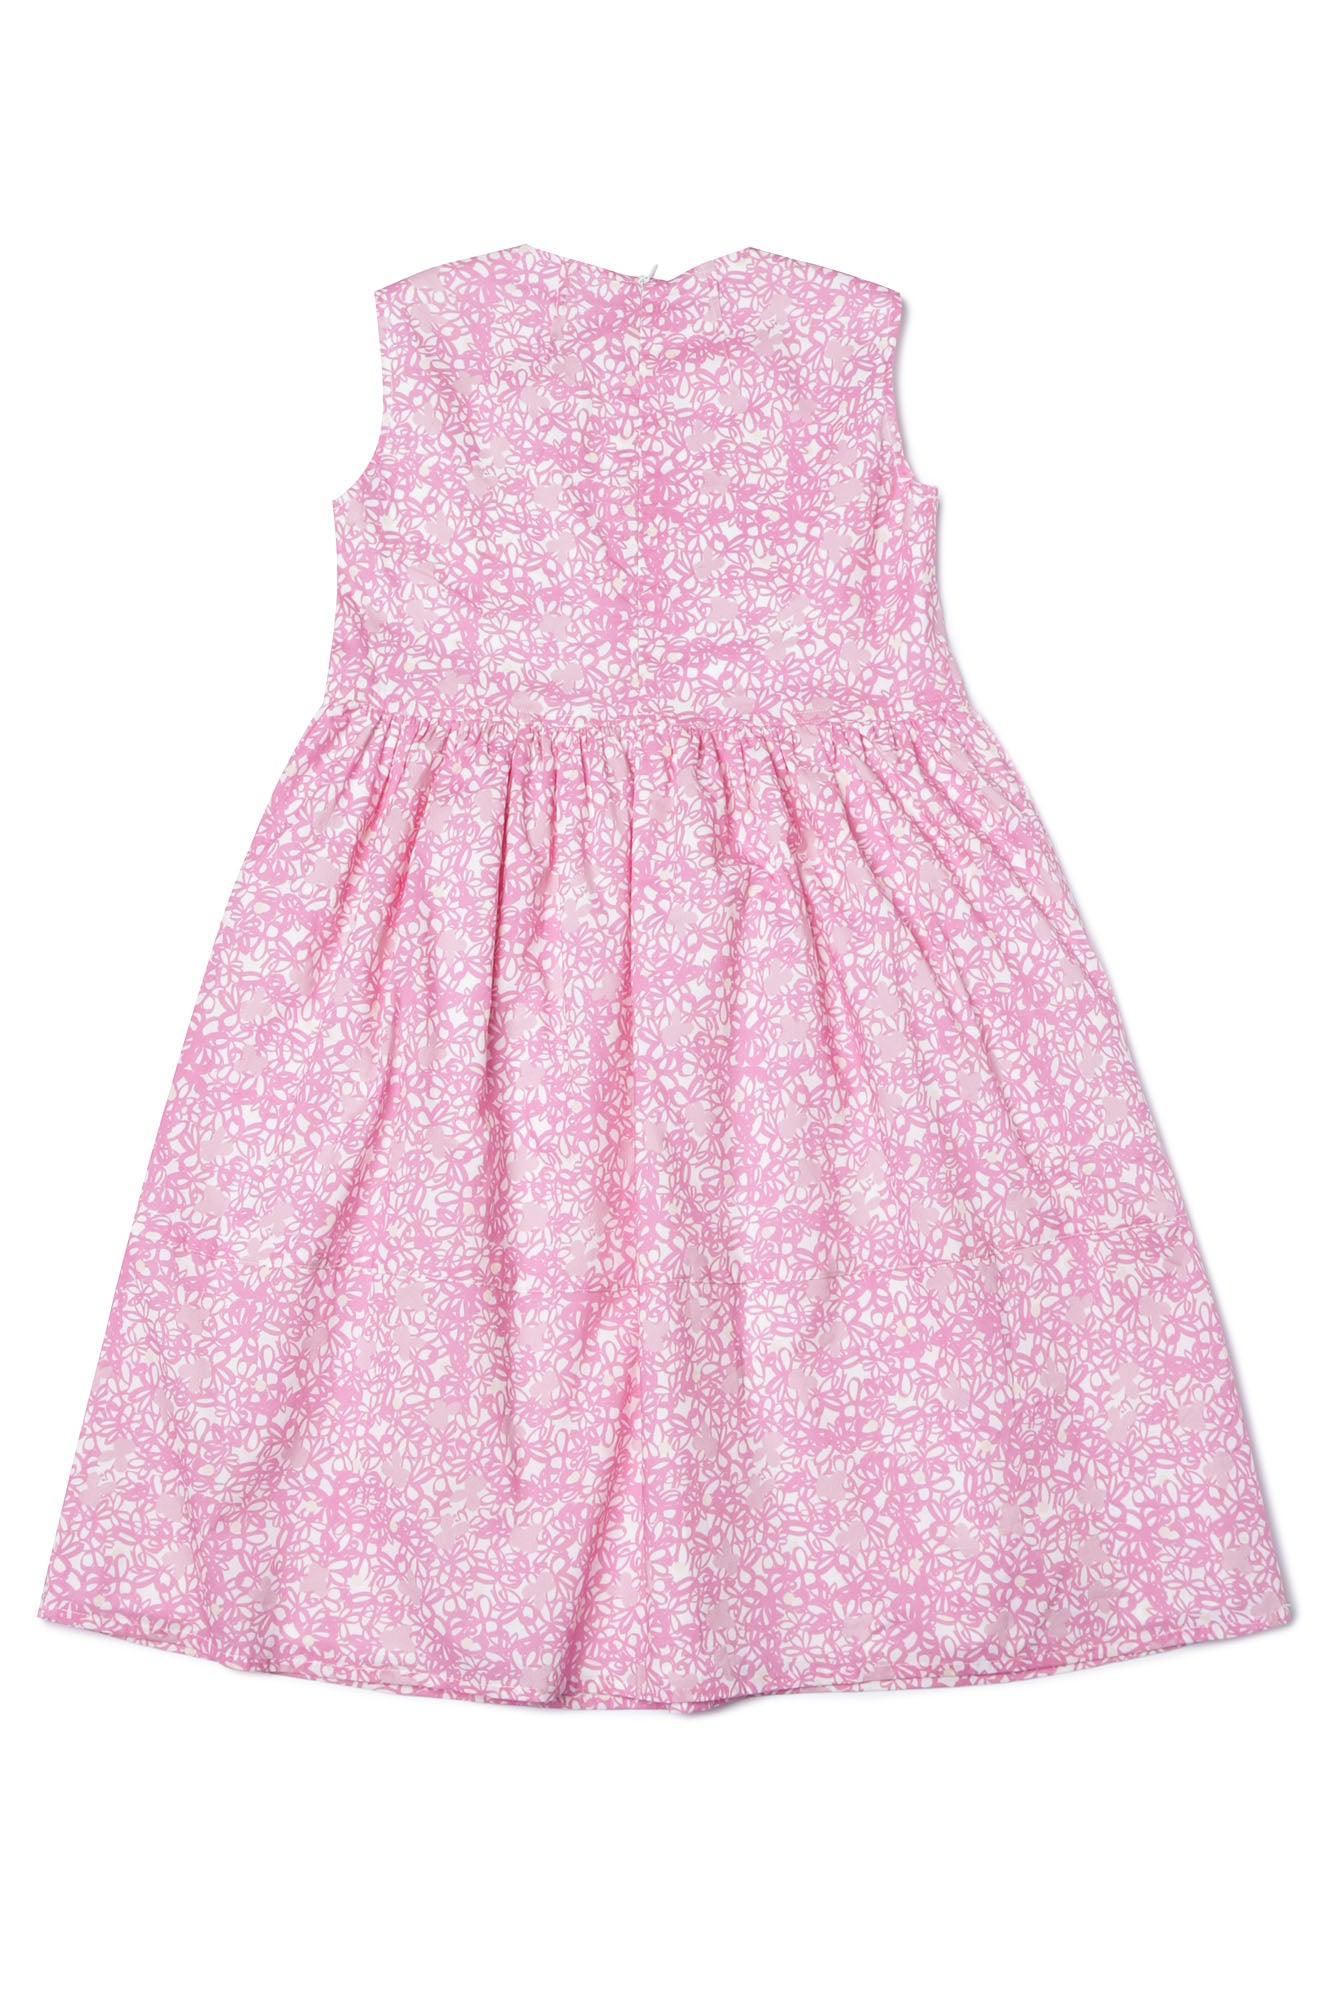 Girls Pink Cotton Dress